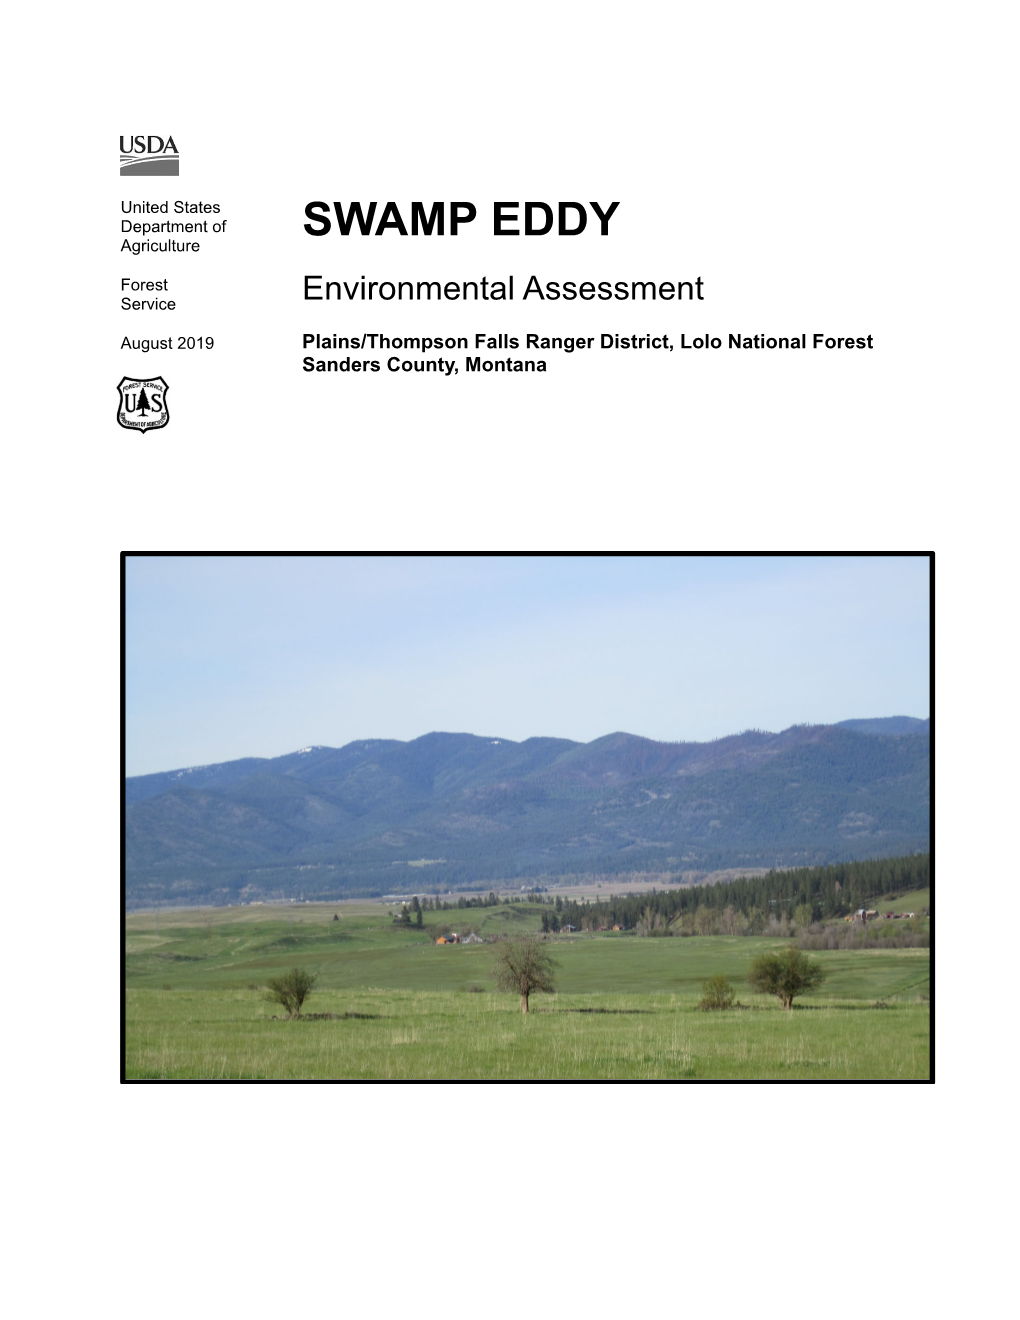 SWAMP EDDY Agriculture